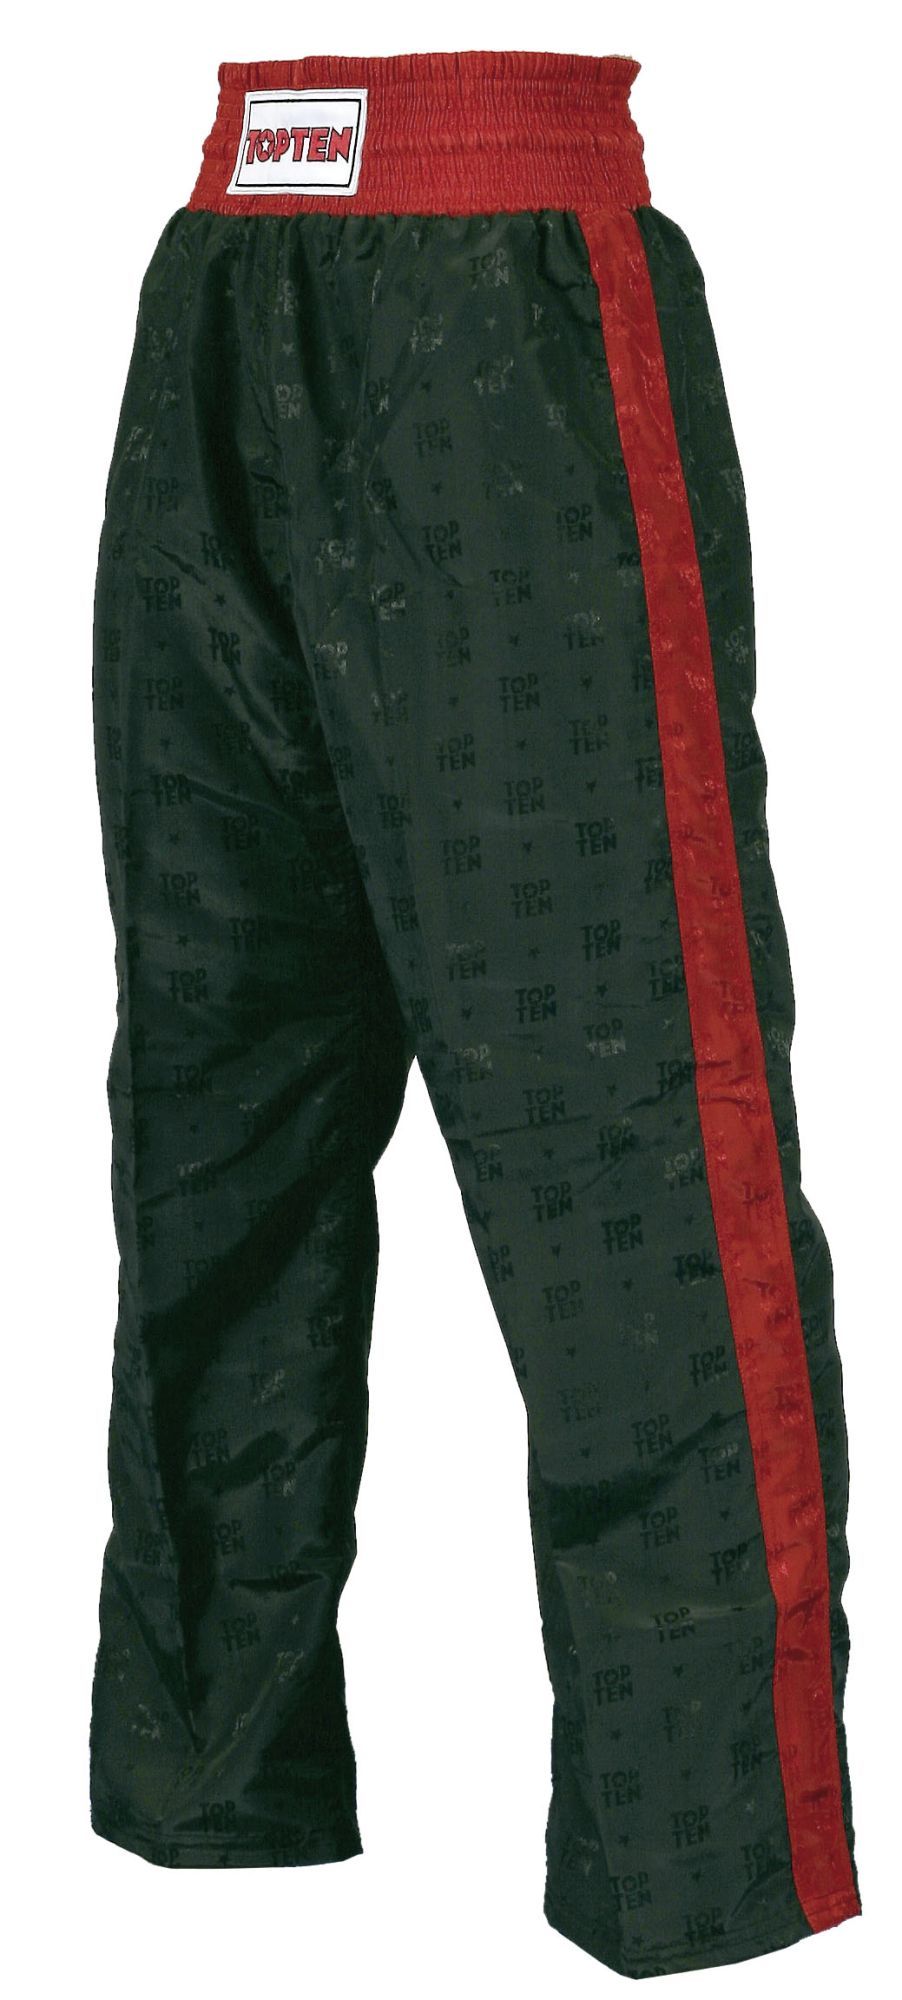 Top Ten Kickboxing Pants Black with Red Stripe